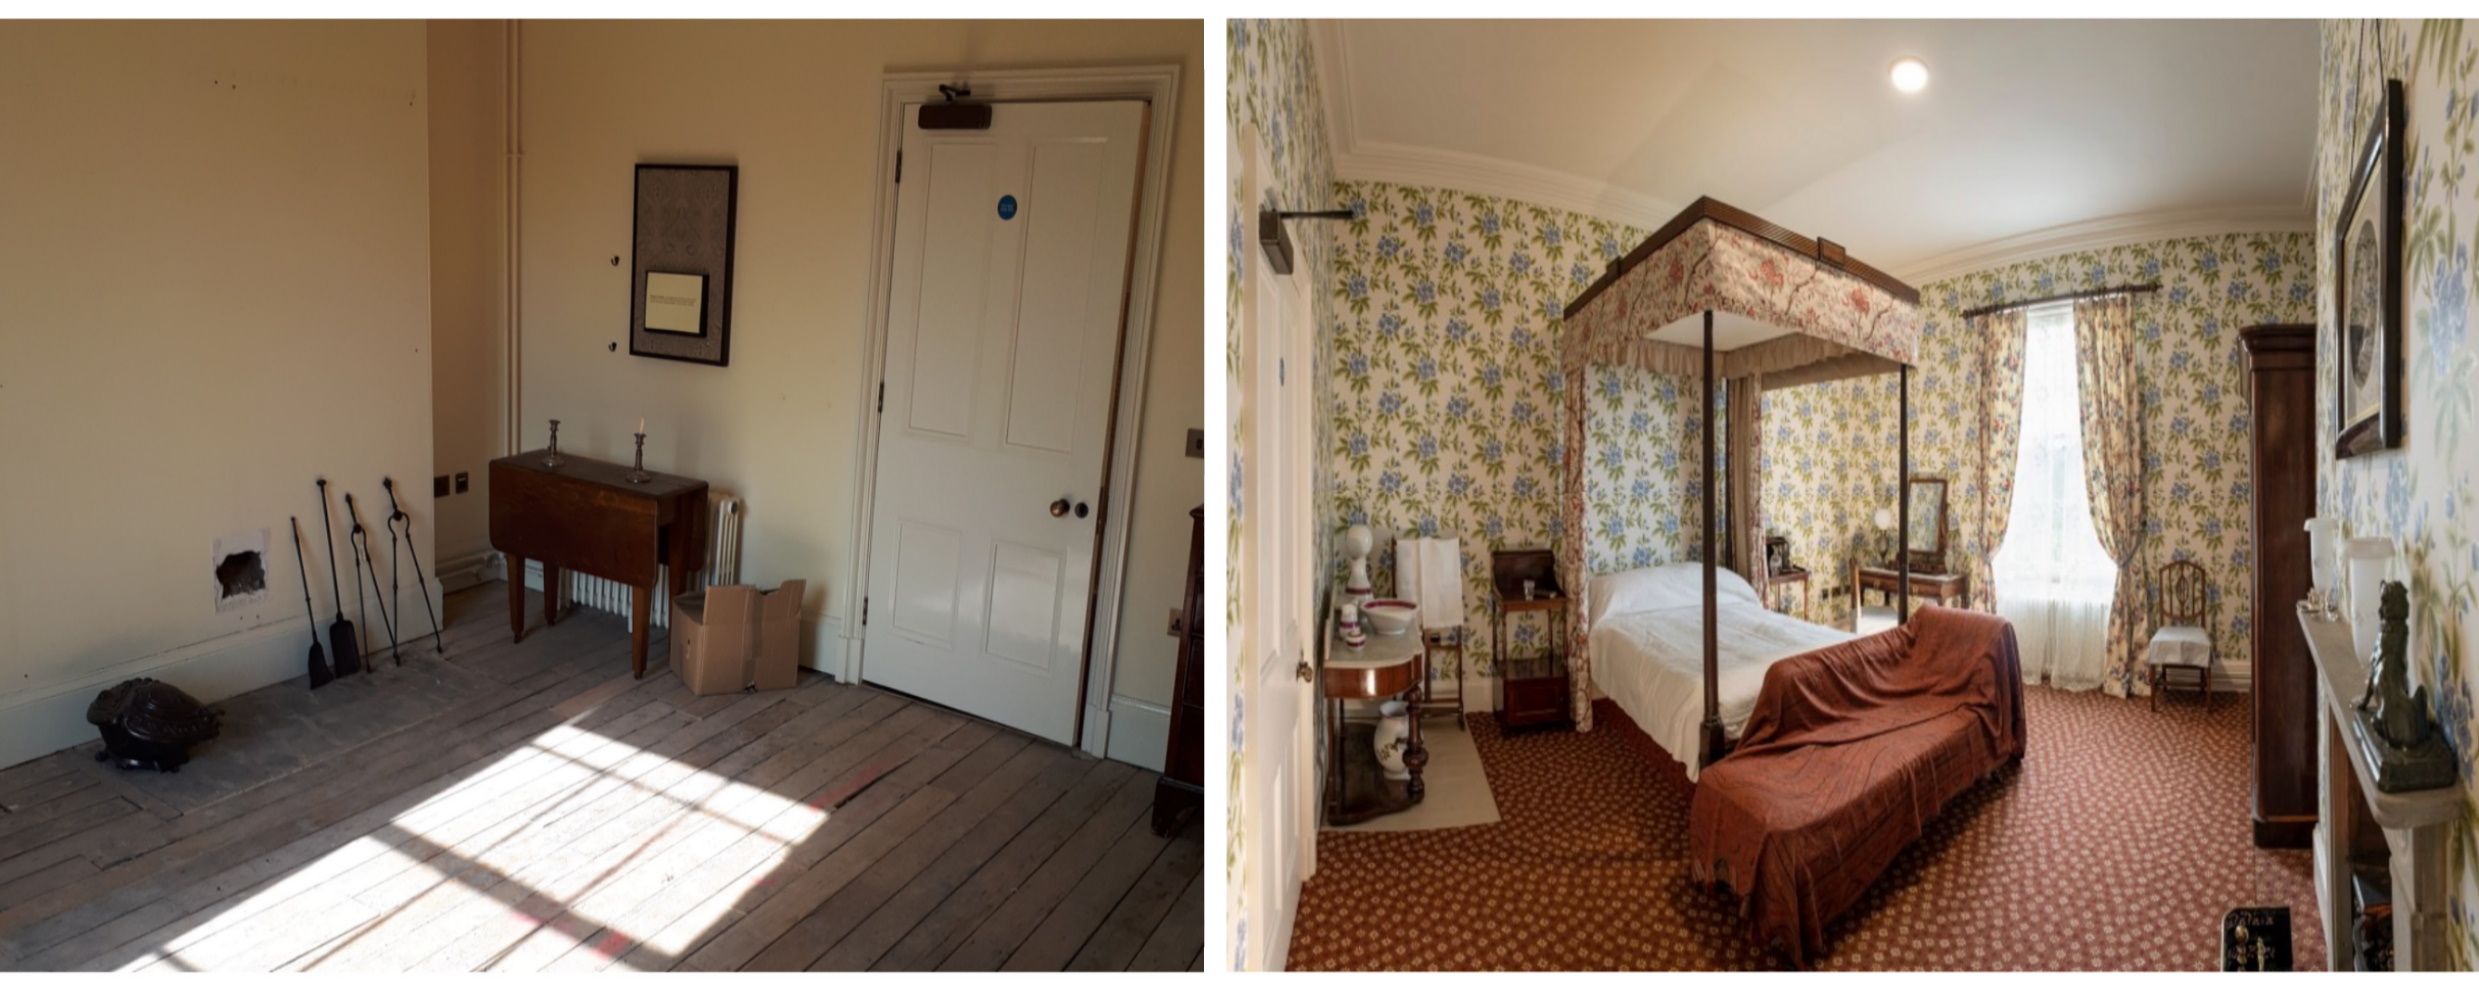 Image of Elizabeth Gaskell's bedroom in Restoring Elizabeth Gaskell’s Bedroom